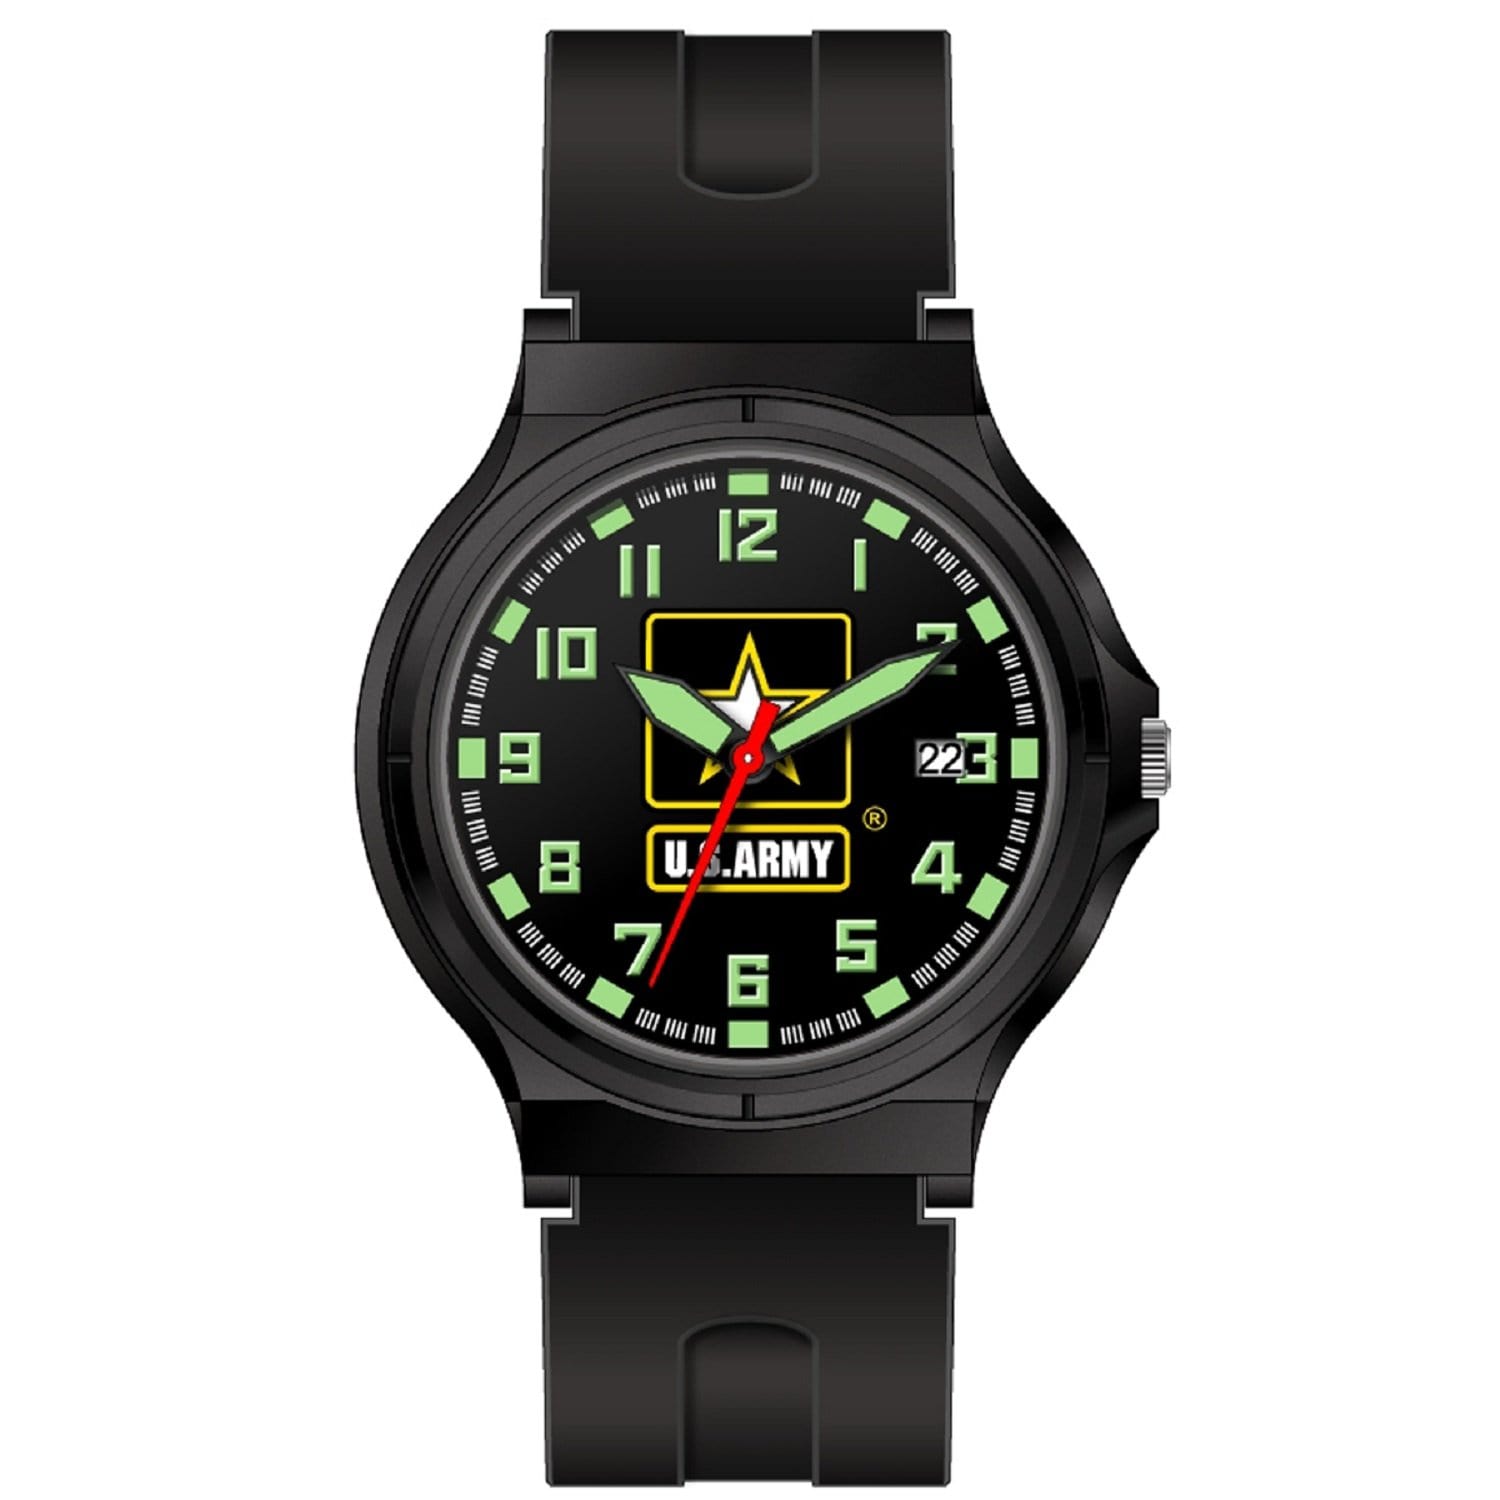 Aquaforce Apparel : Watches Aquaforce Analog Watch U.S. Army Logo